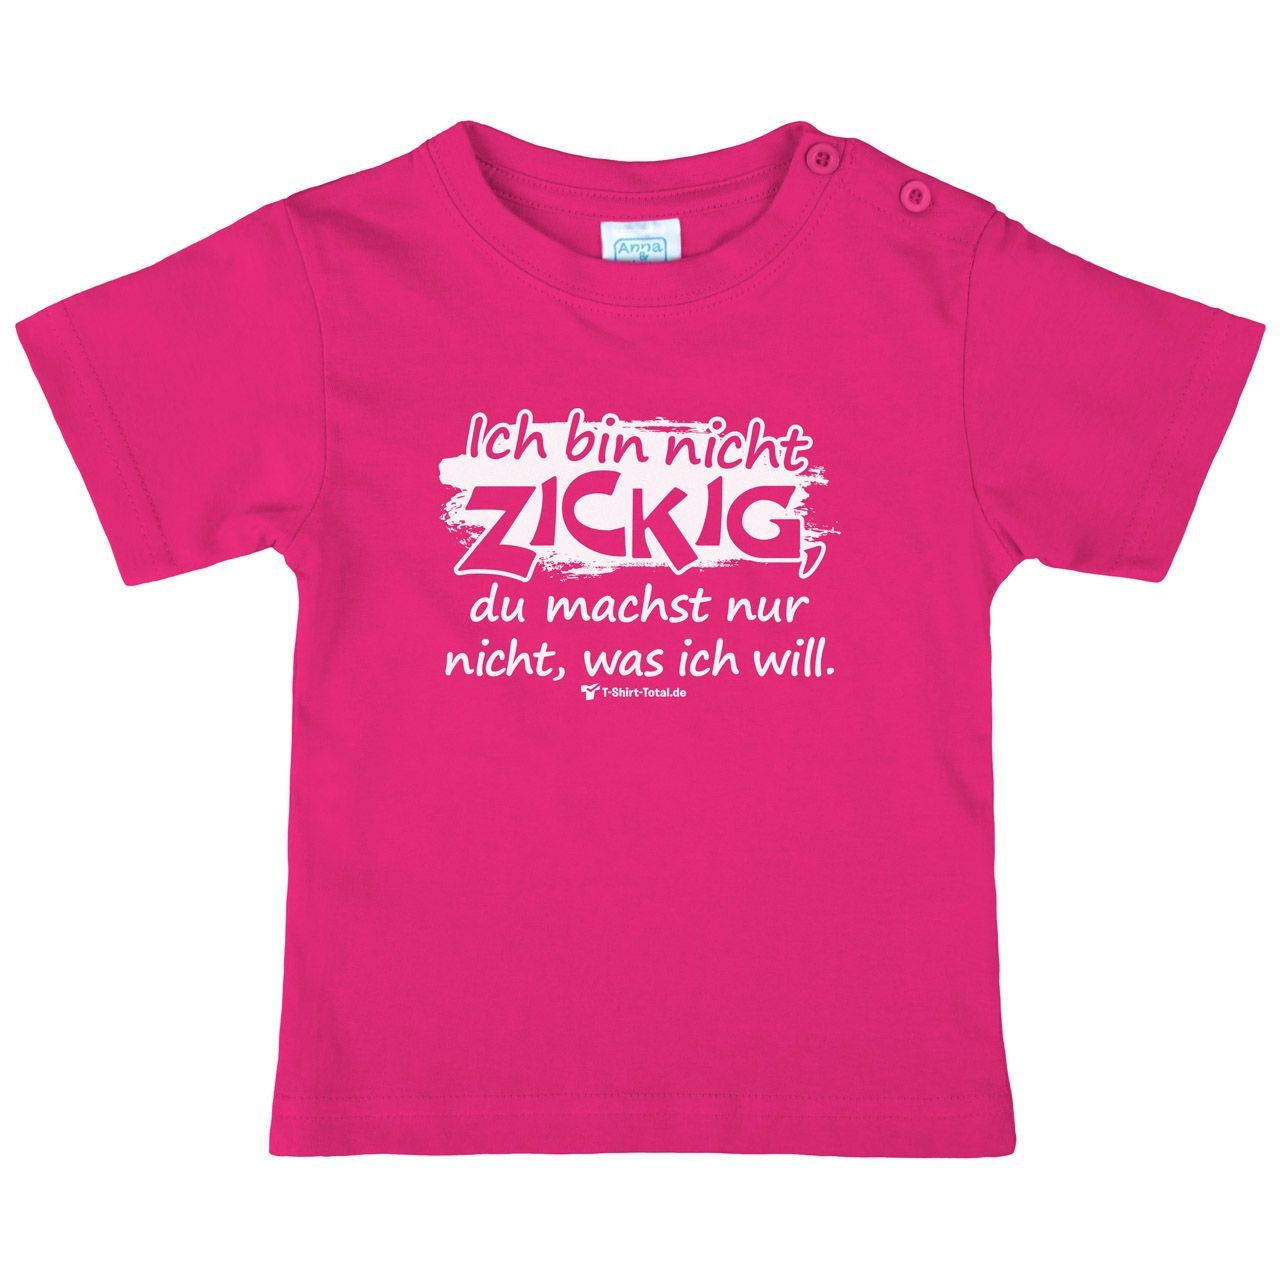 Bin nicht zickig Kinder T-Shirt pink 92